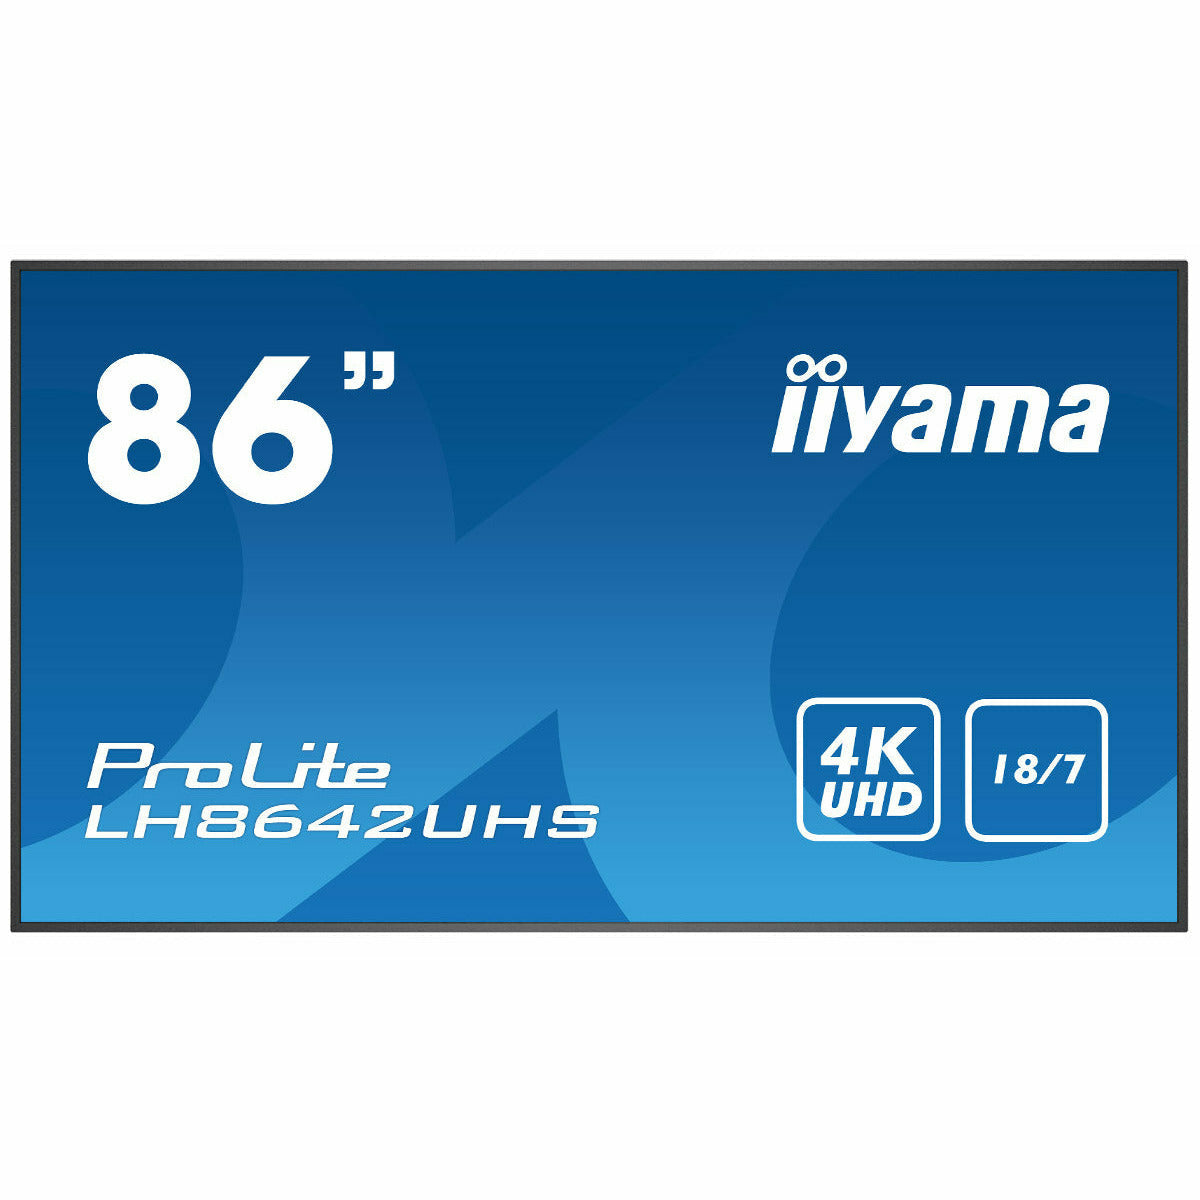 iiyama ProLite LH8642UHS-B3 86" IPS 4K LFD 18/7 with Android 8.0 and iiyama N-sign integrated Signage Platform